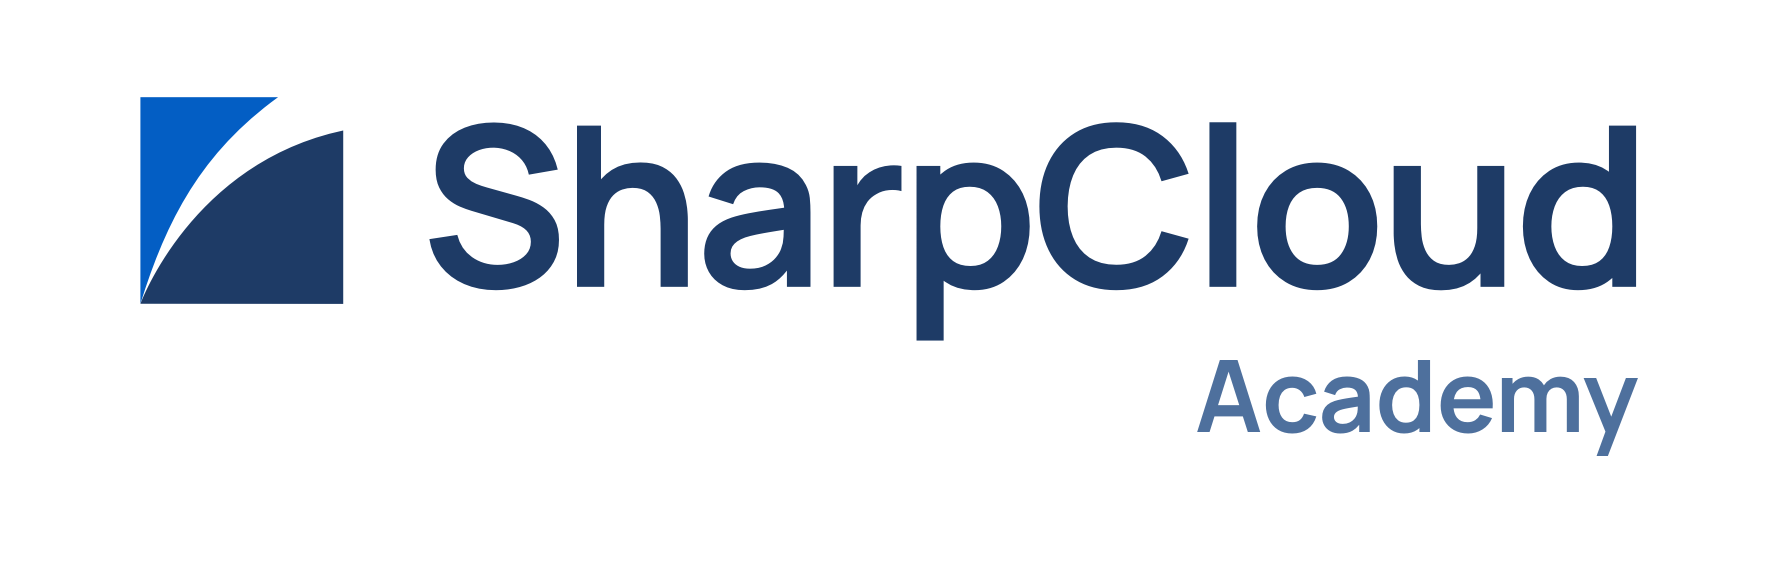 Sharpcloud Academy logo